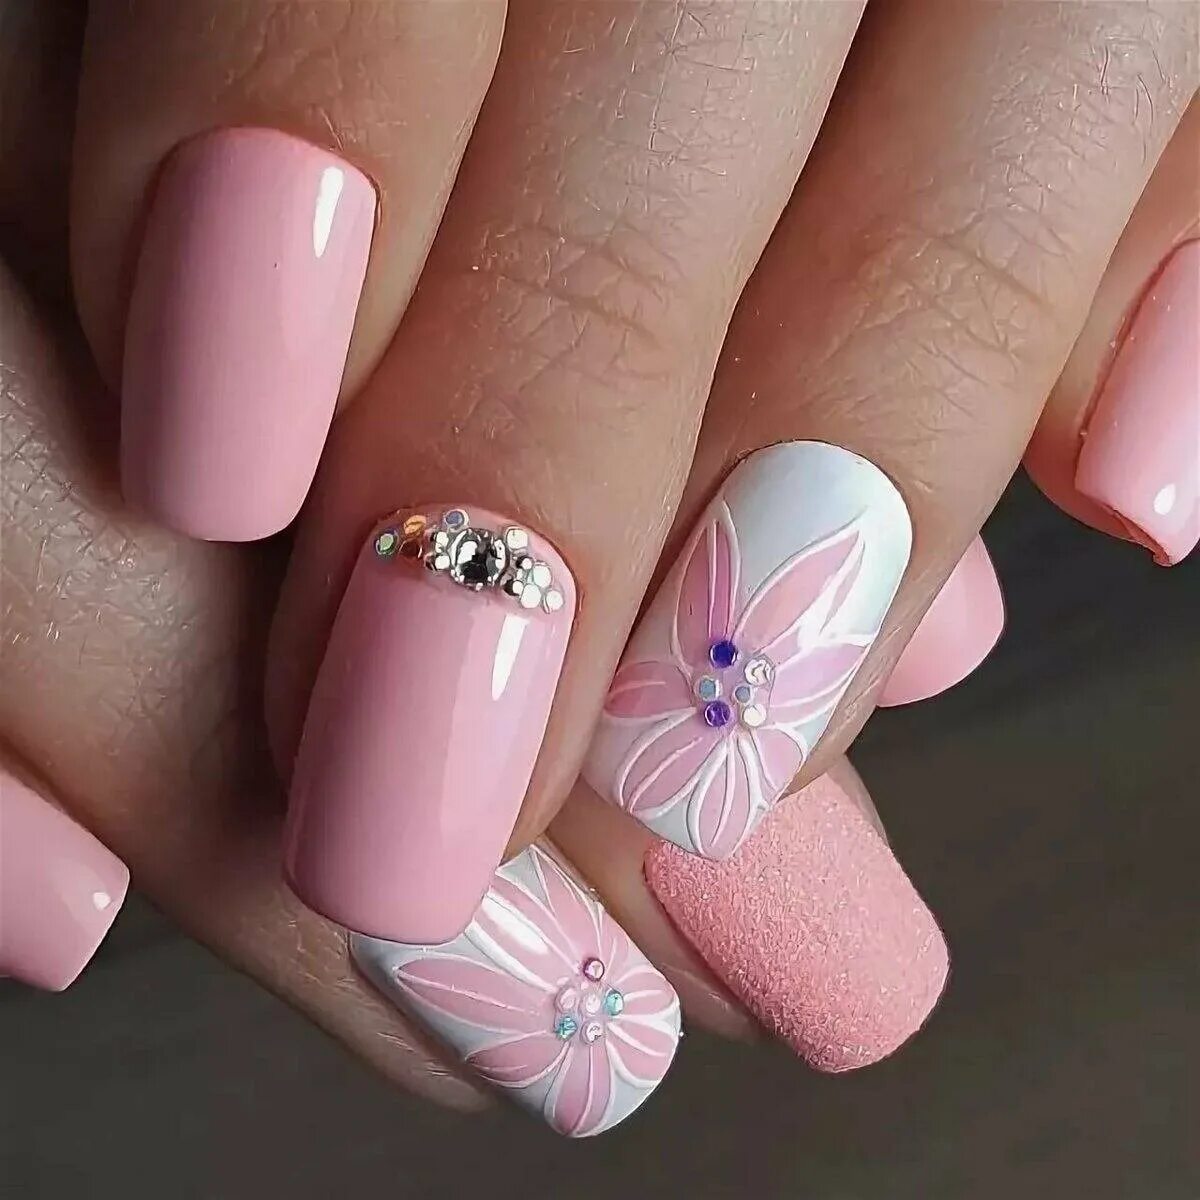 Розовый маникюр. Р̸о̸з̸о̸в̸ы̸й̸ м̸а̸н̸и̸к̸. Красивые ногти. Красивые ногти на лето. Шикарный весенний маникюр